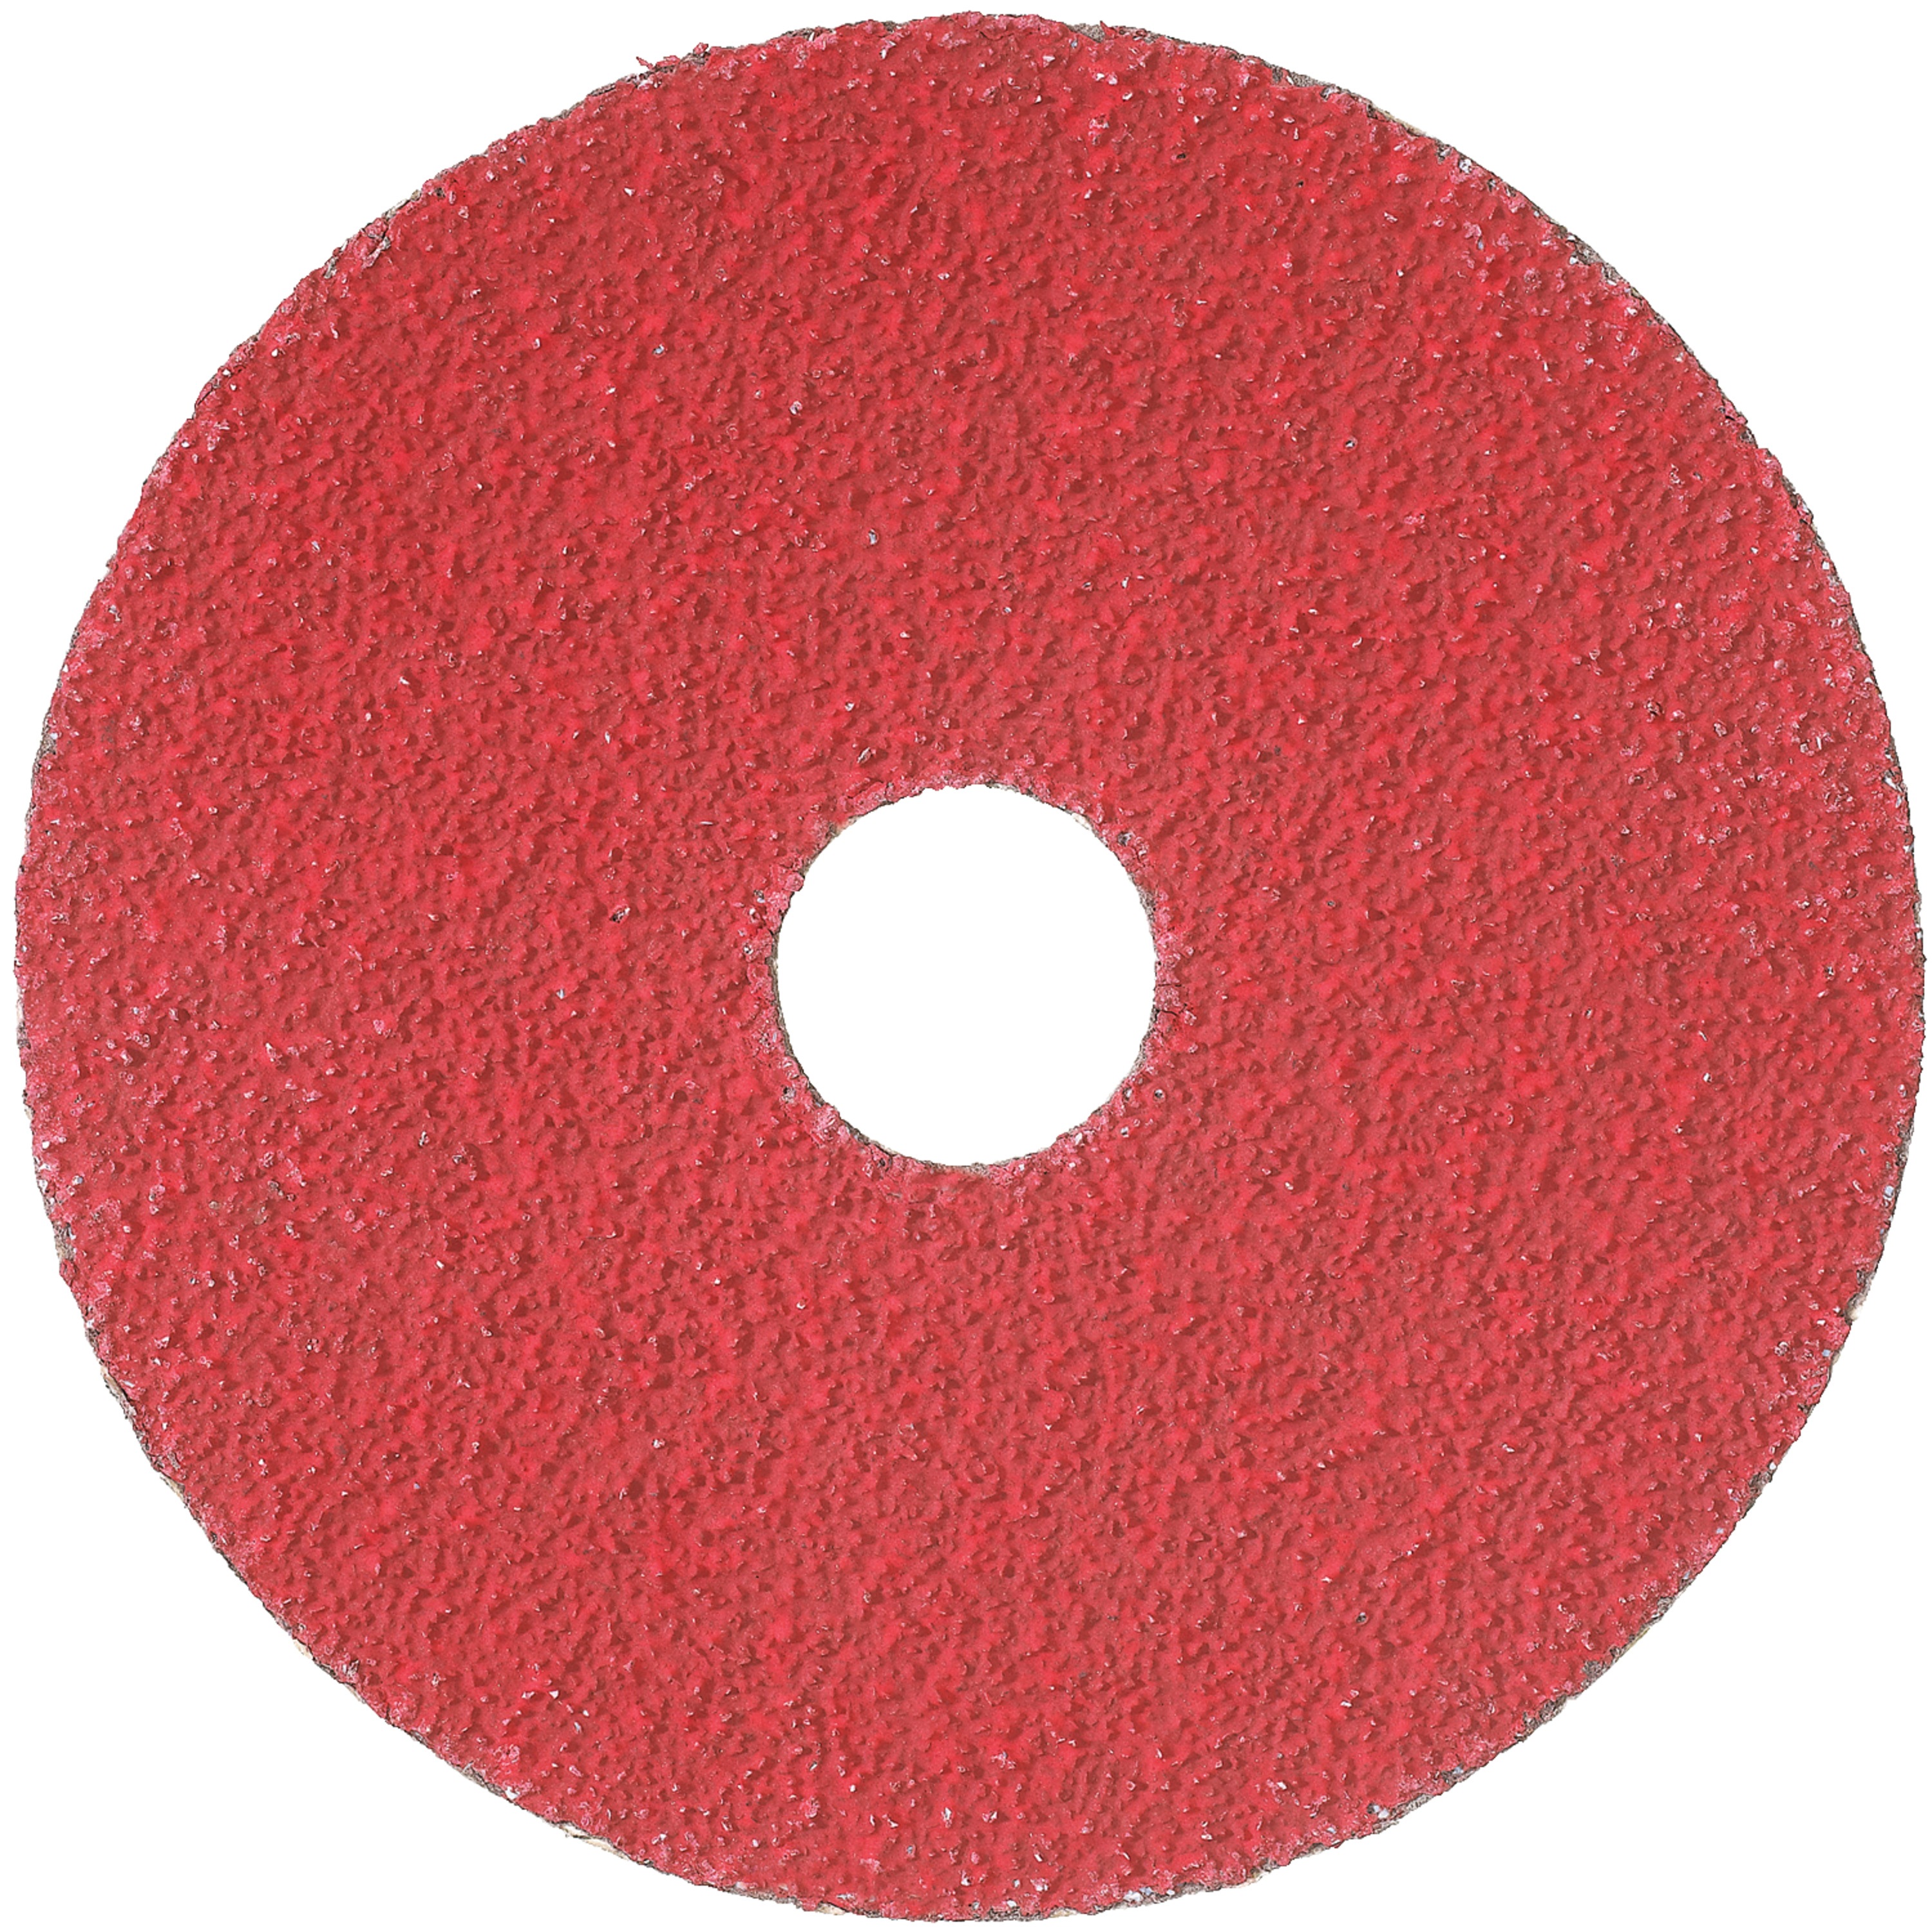 Profile of XP3 Ceramic Fiber Disc